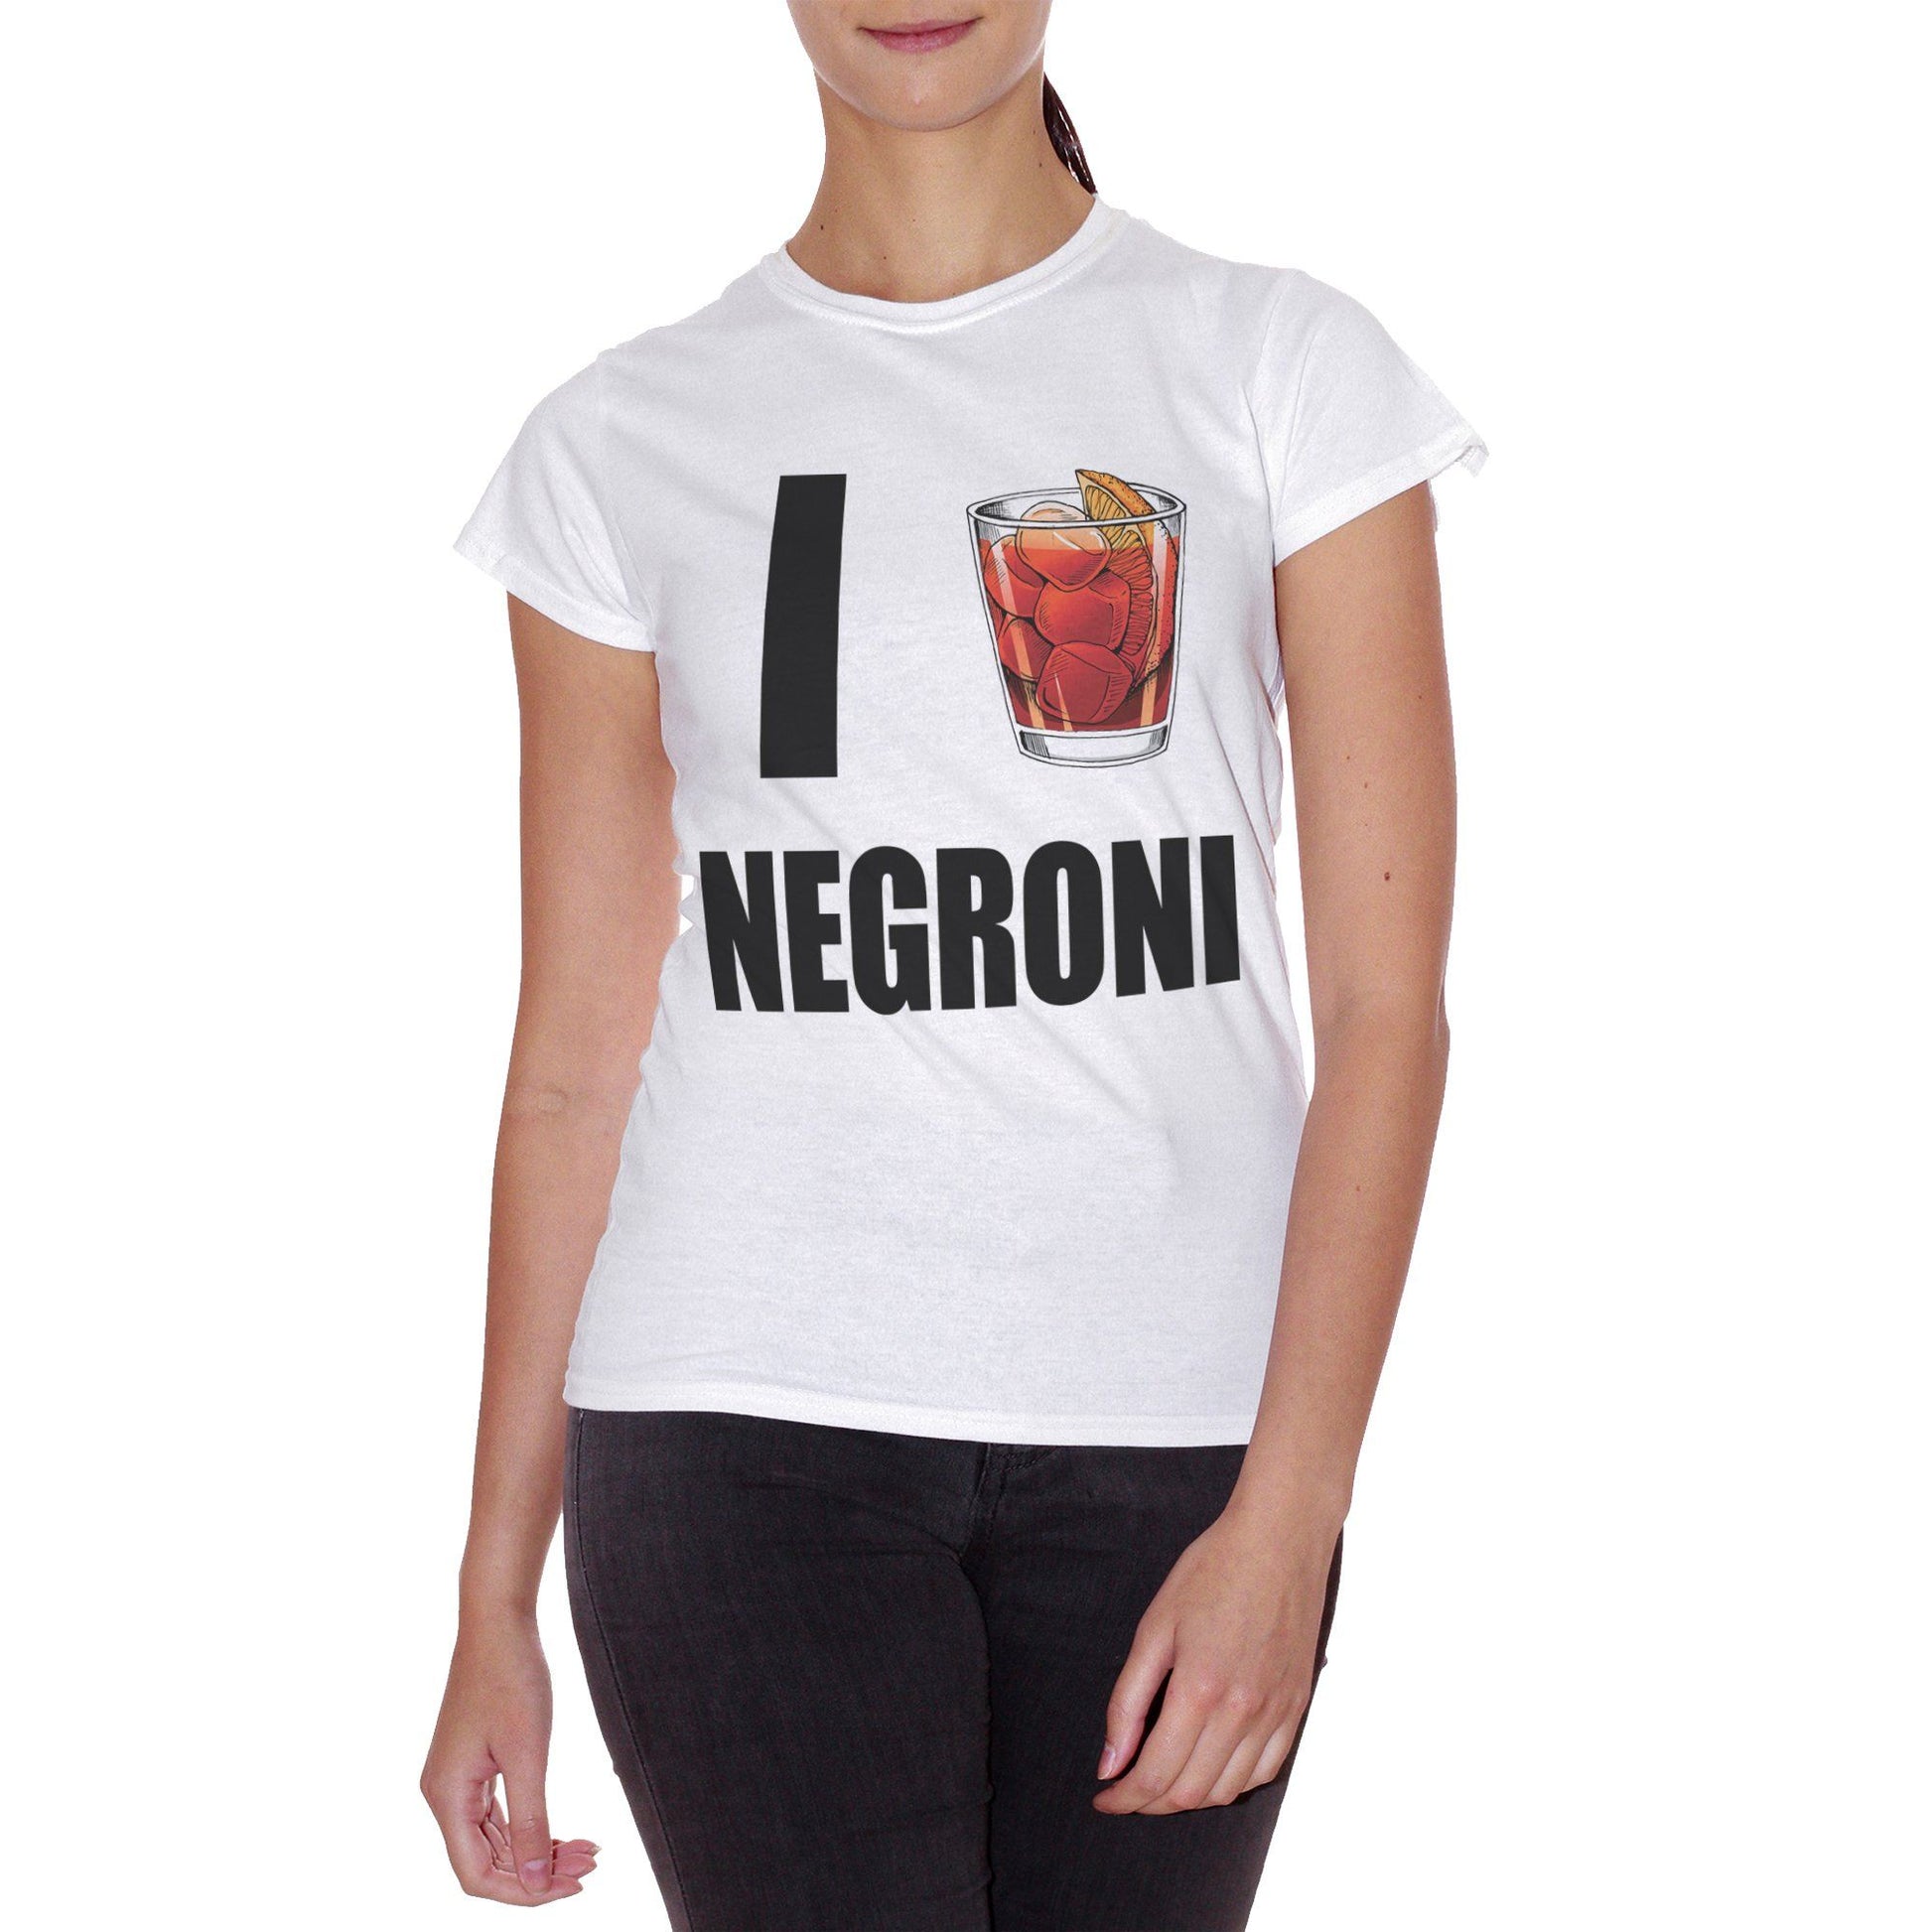 Lavender T-Shirt I Love Spritz Negroni Amaro Drink - SOCIAL CucShop